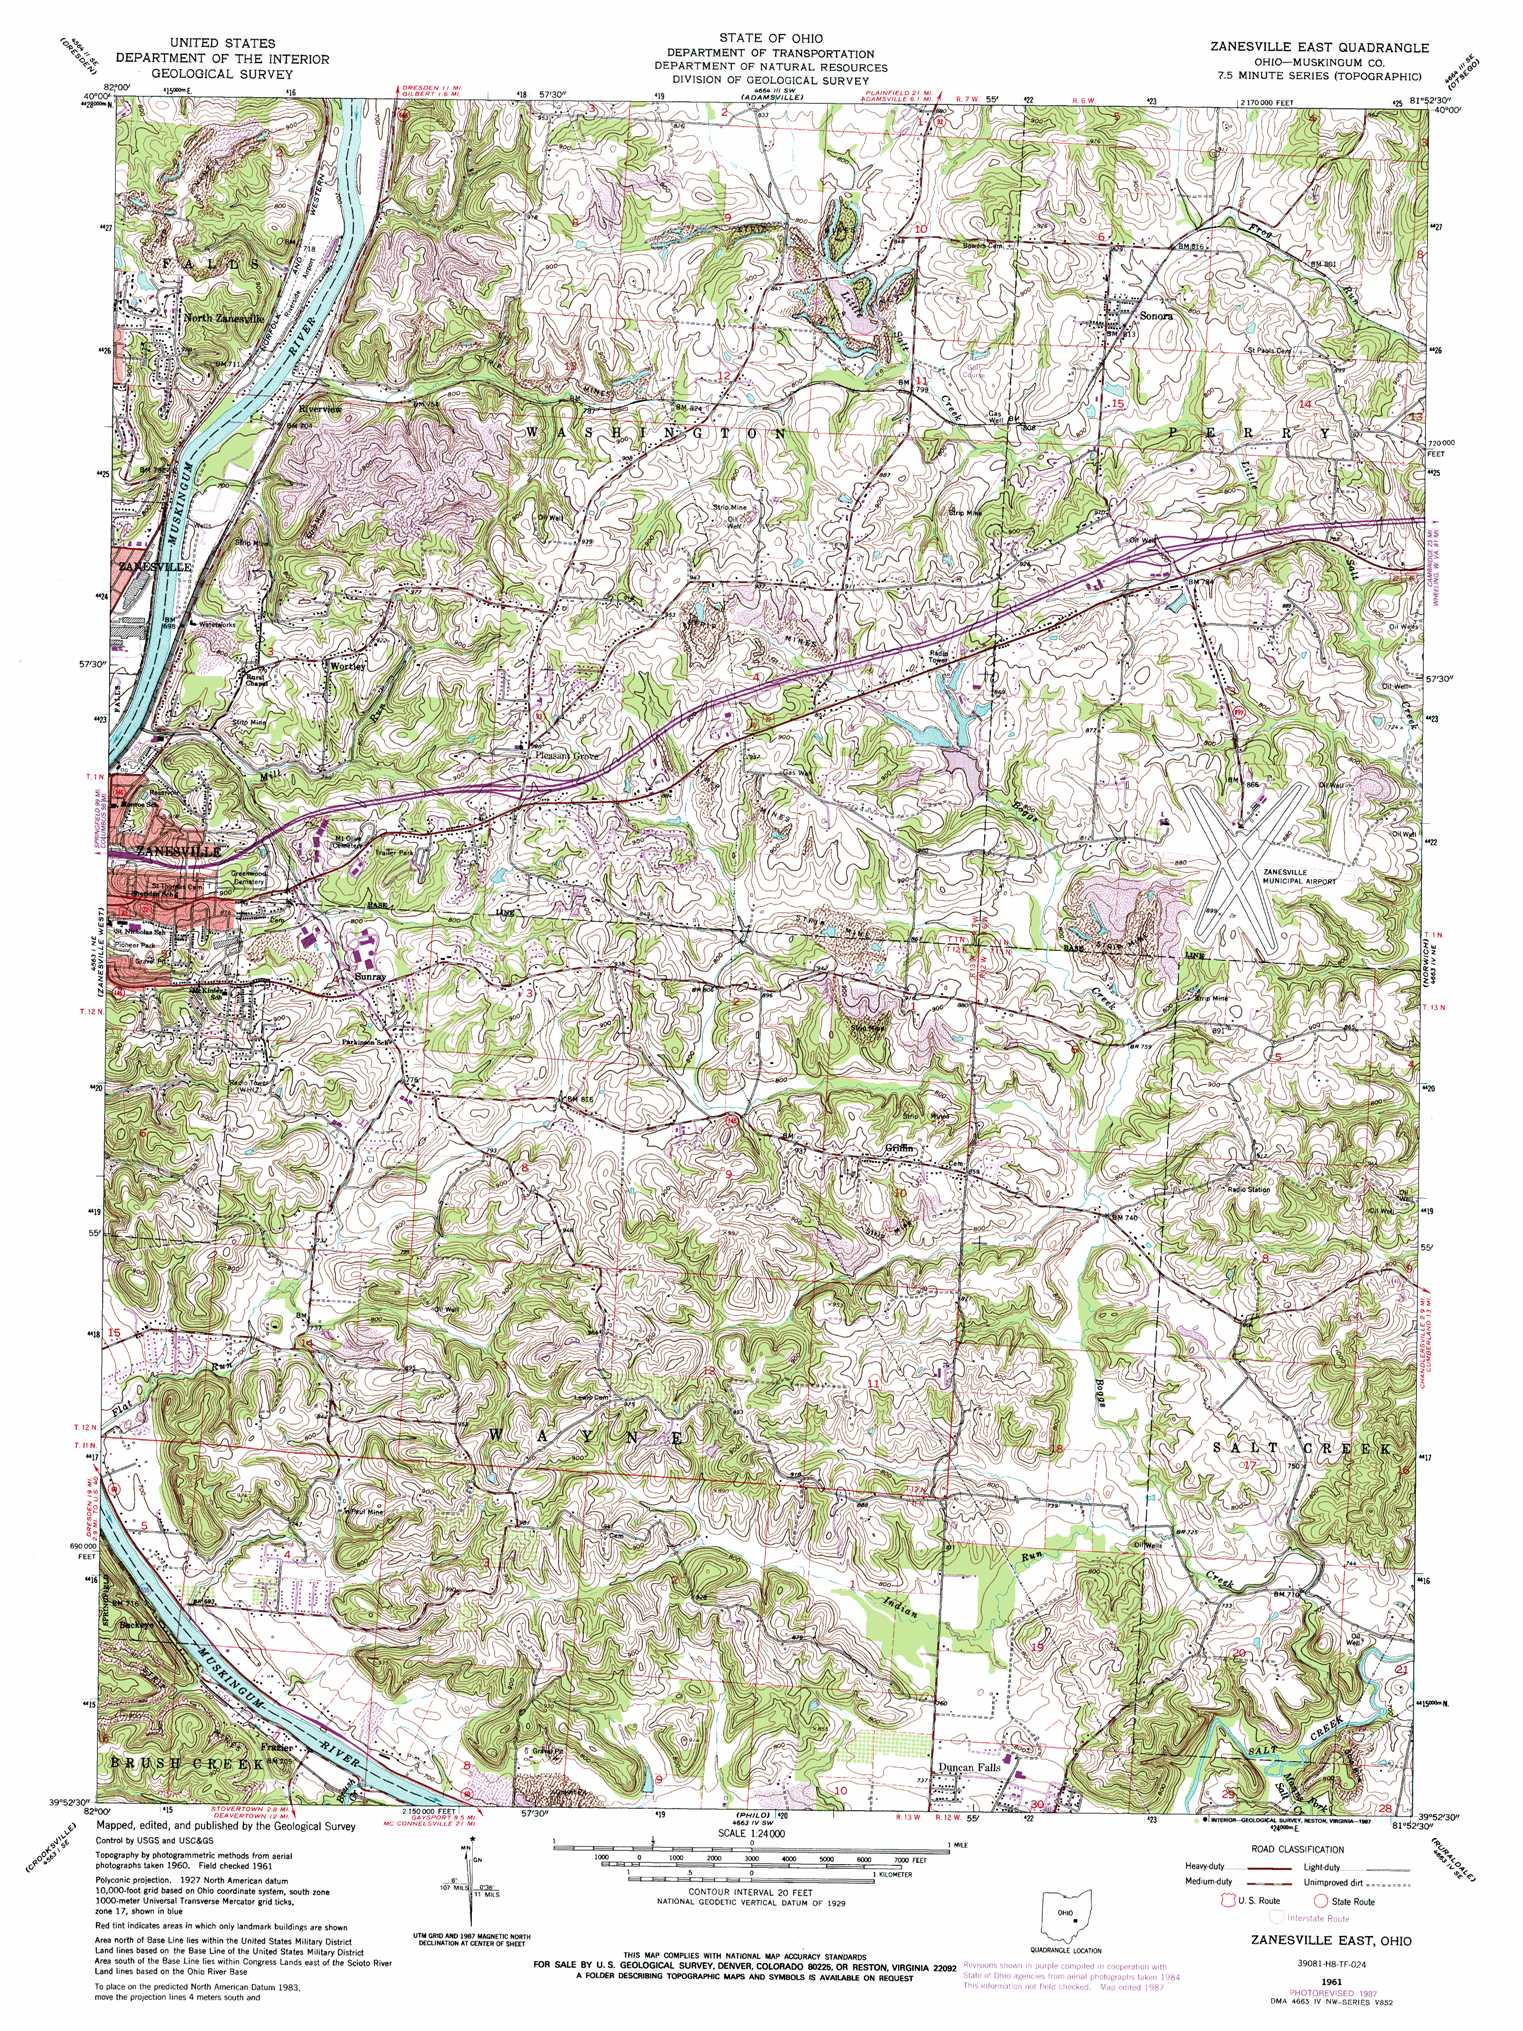 Zanesville East topographic map, OH - USGS Topo Quad 39081h8